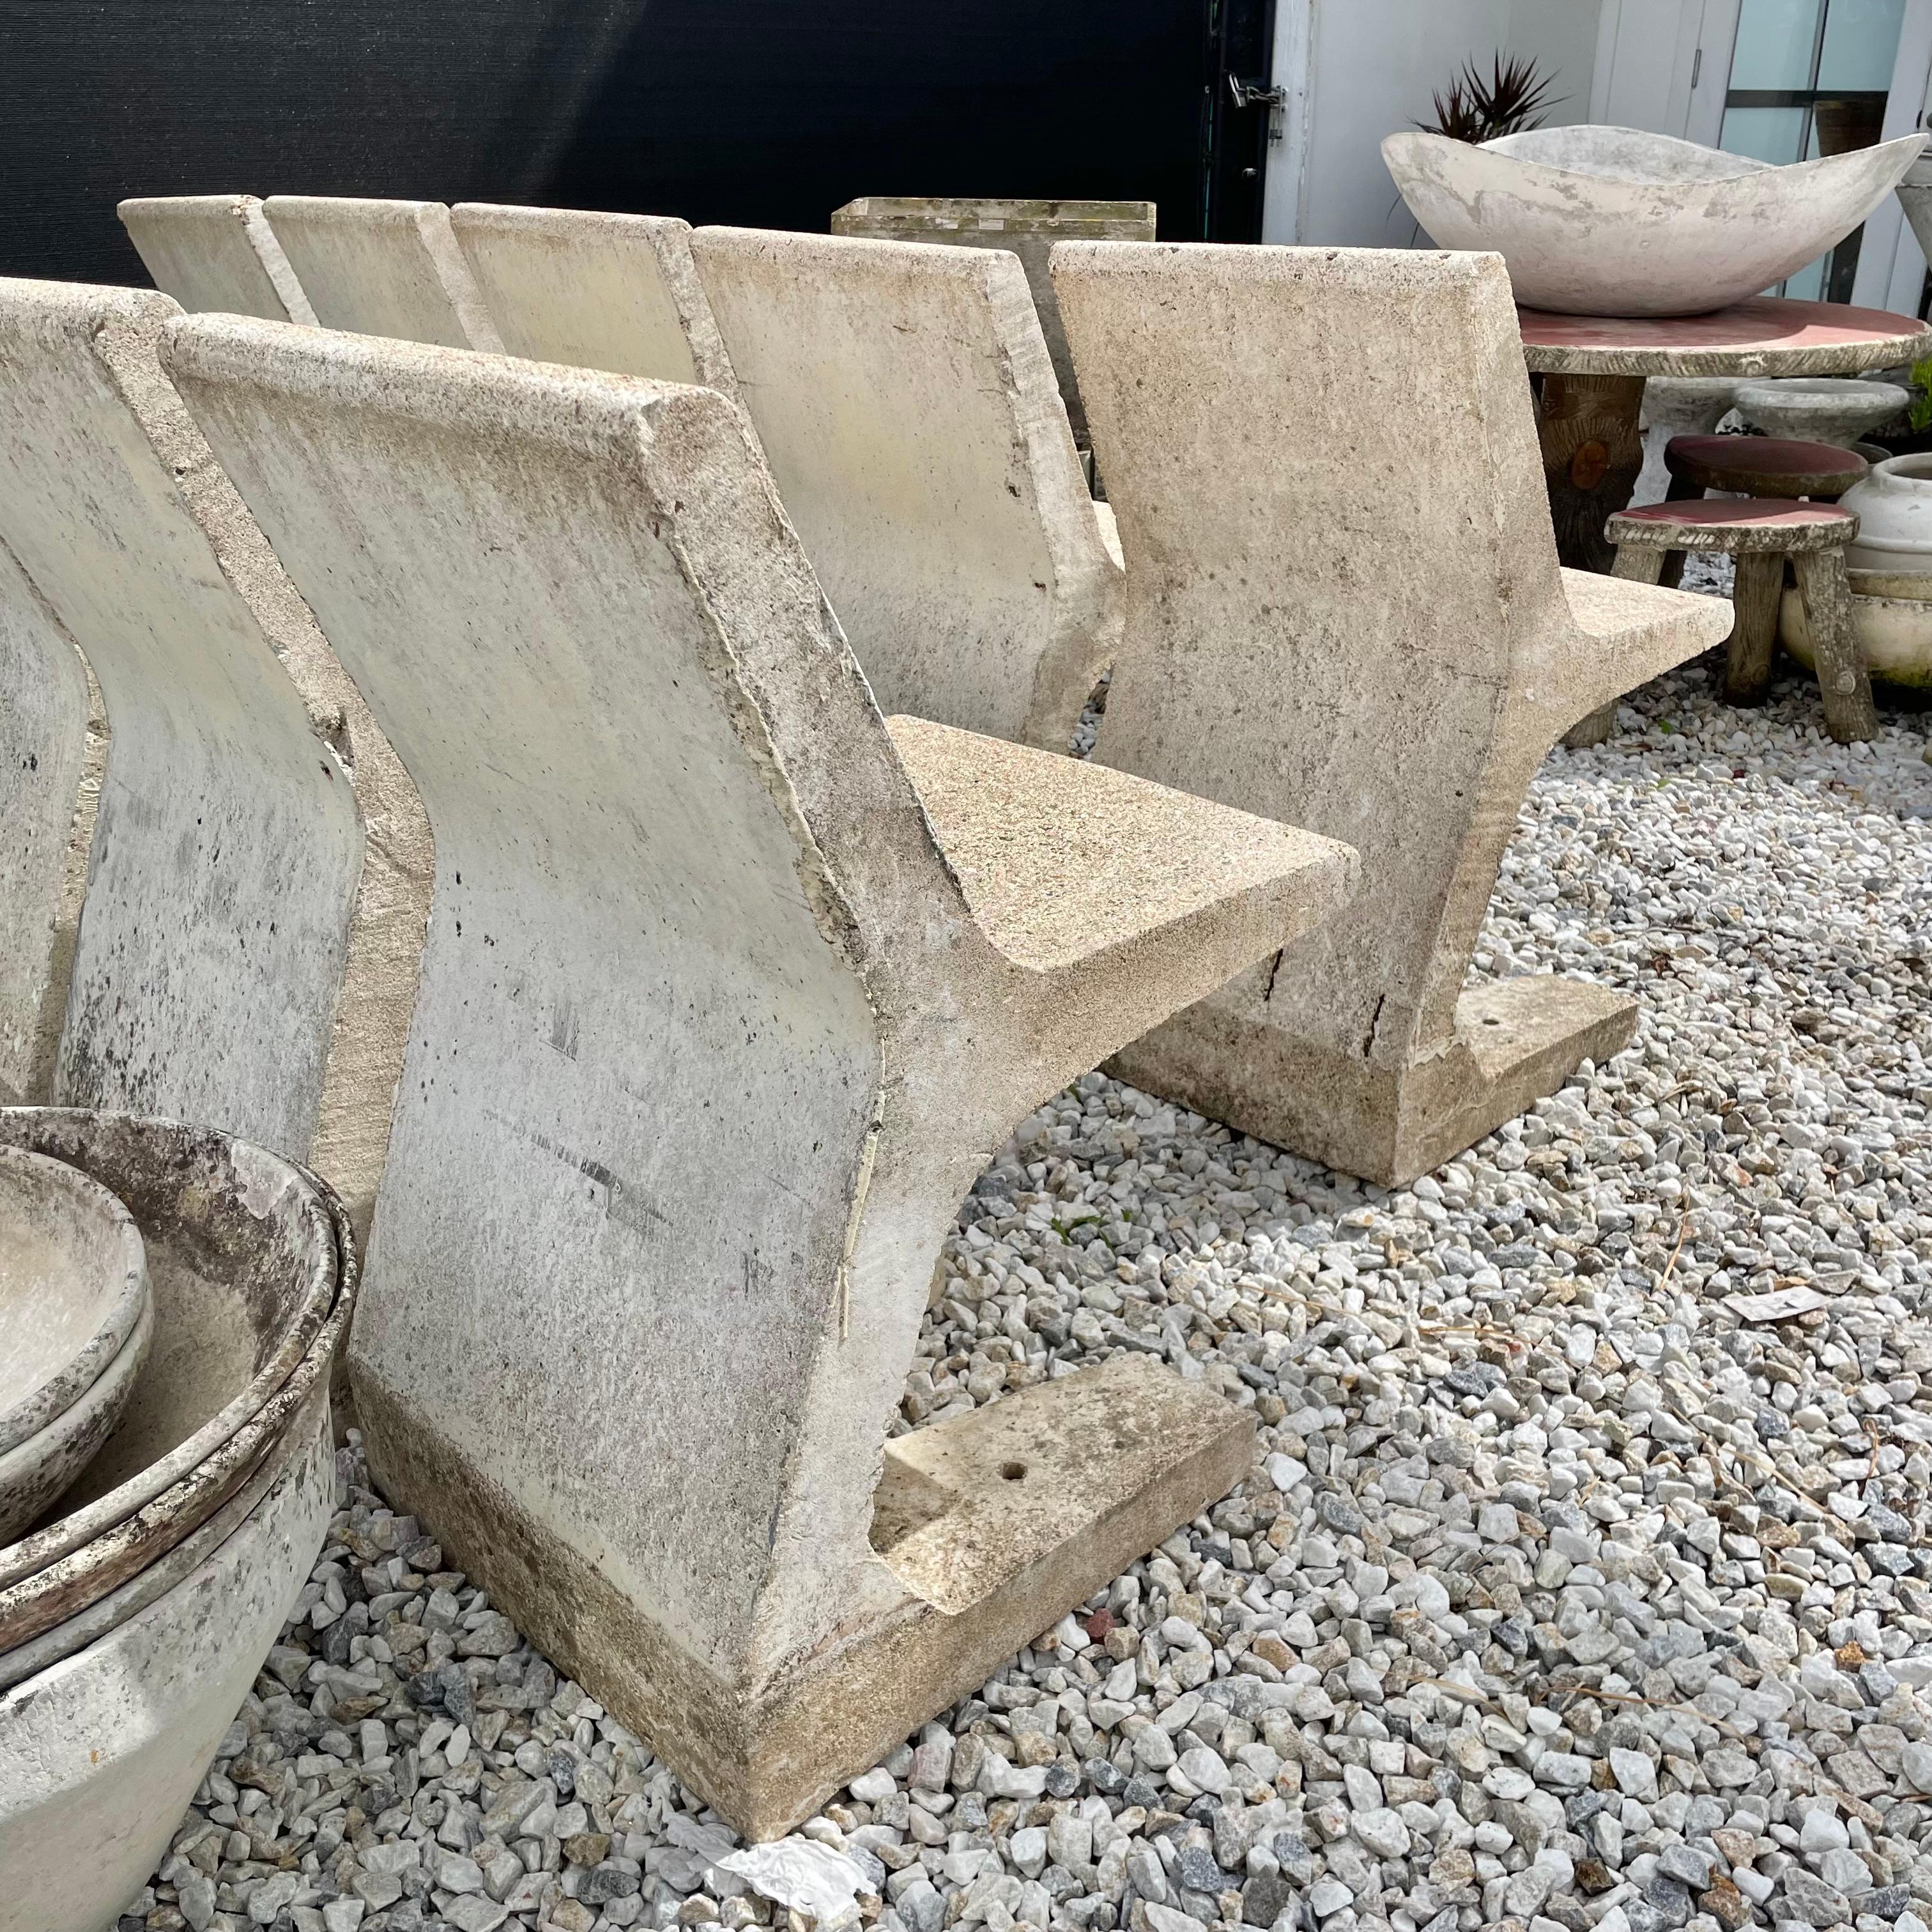 Monumental Concrete Sculptural Chairs, 1970s, France For Sale 5